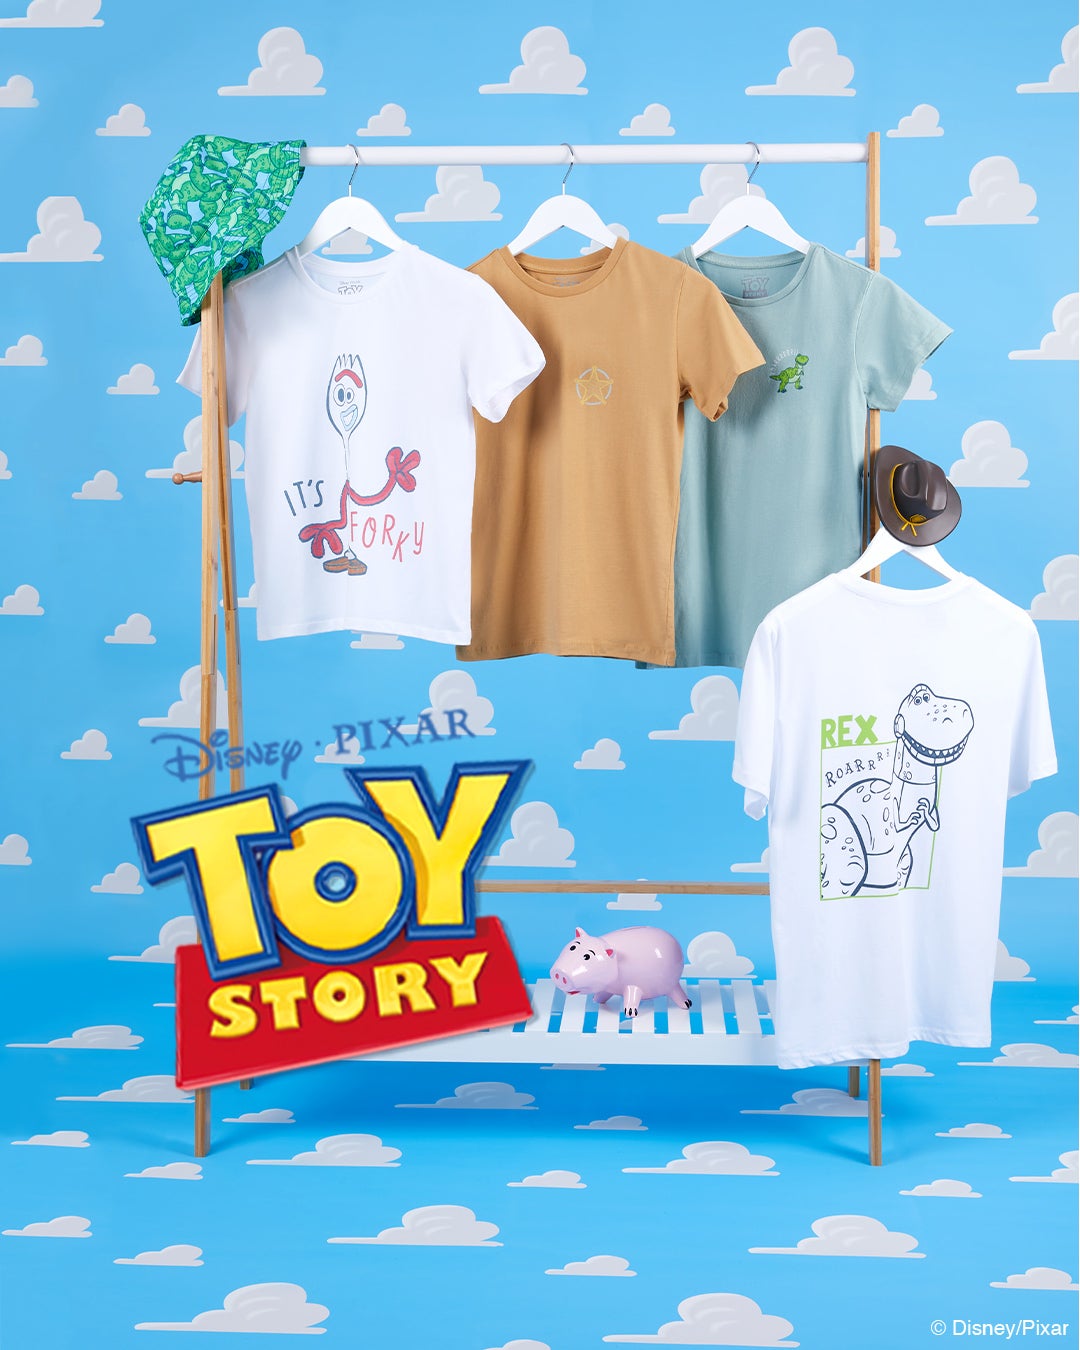 Toy Story Rex collection at VeryNeko